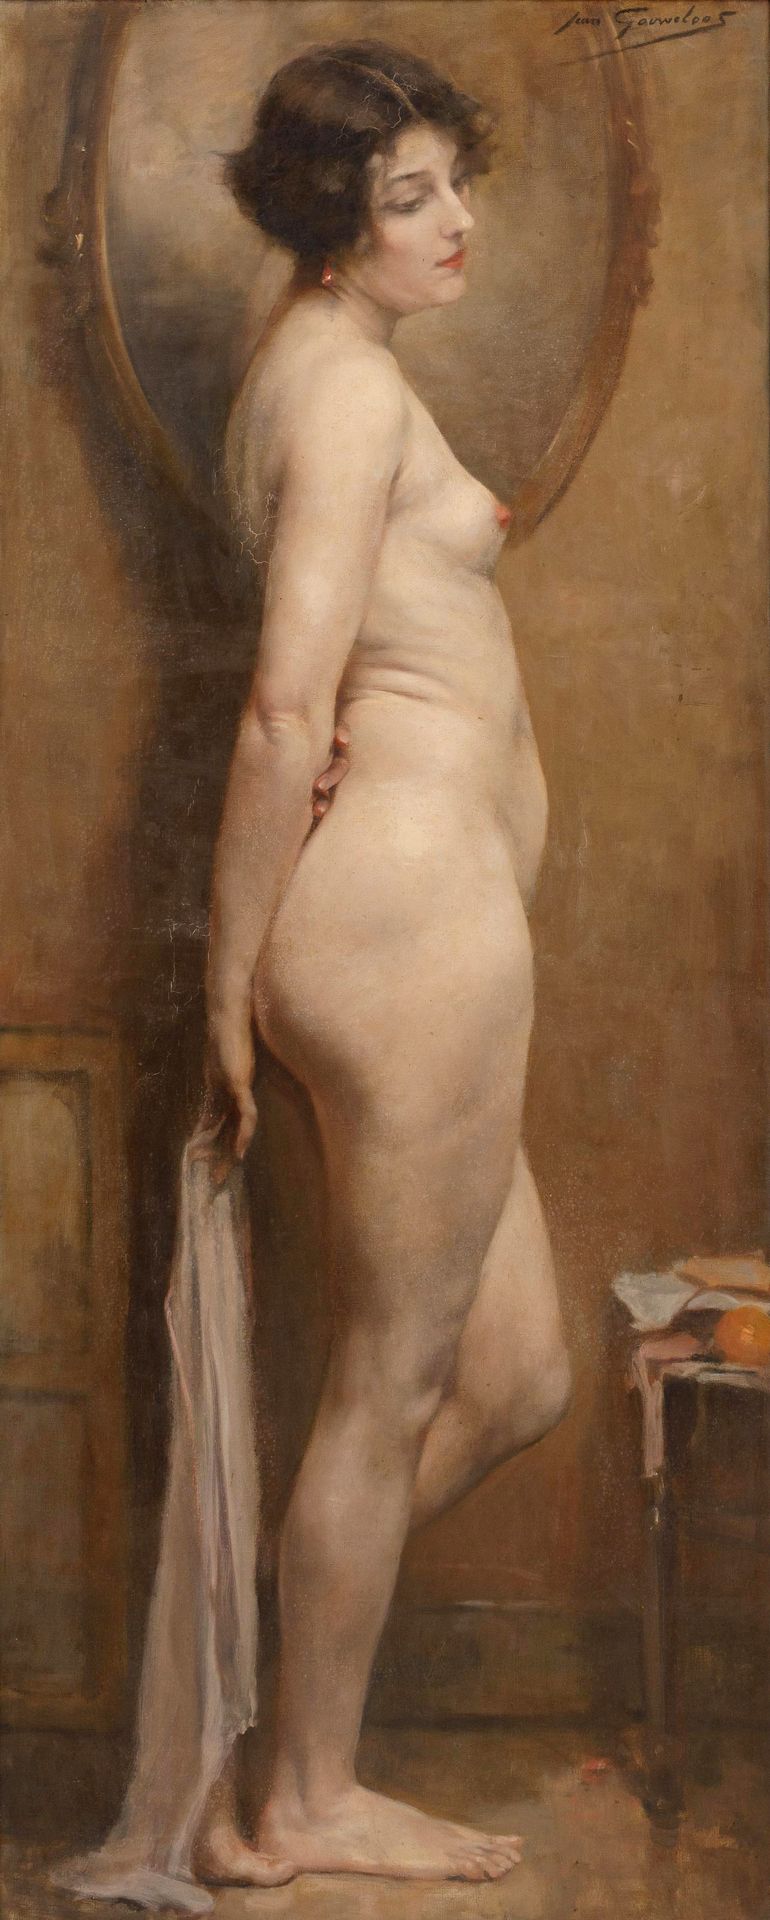 Jean gouweloos (1868-1943) Nudo, sognante.

Tessuto. 

Firmato "Jean Gouweloos".&hellip;